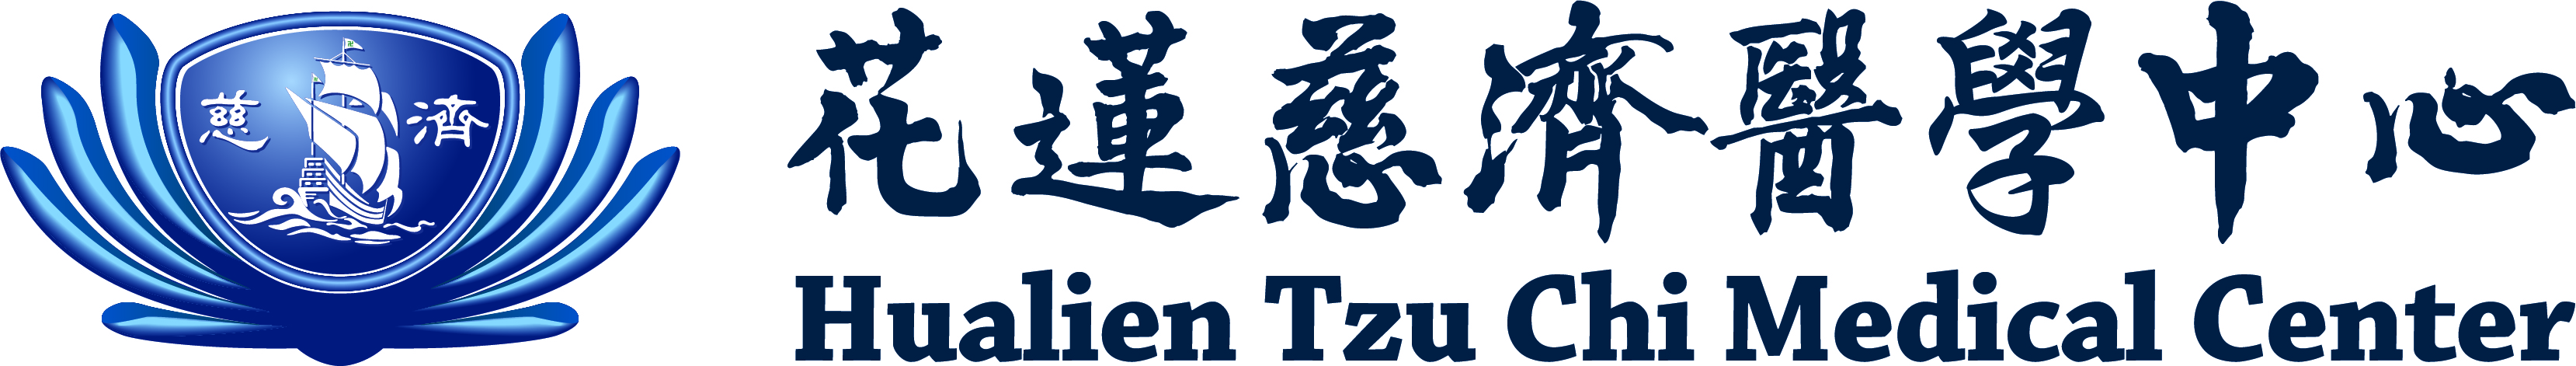 Hualien Tzu Chi Hospital_logo花蓮慈濟醫學中心-中英.jpg